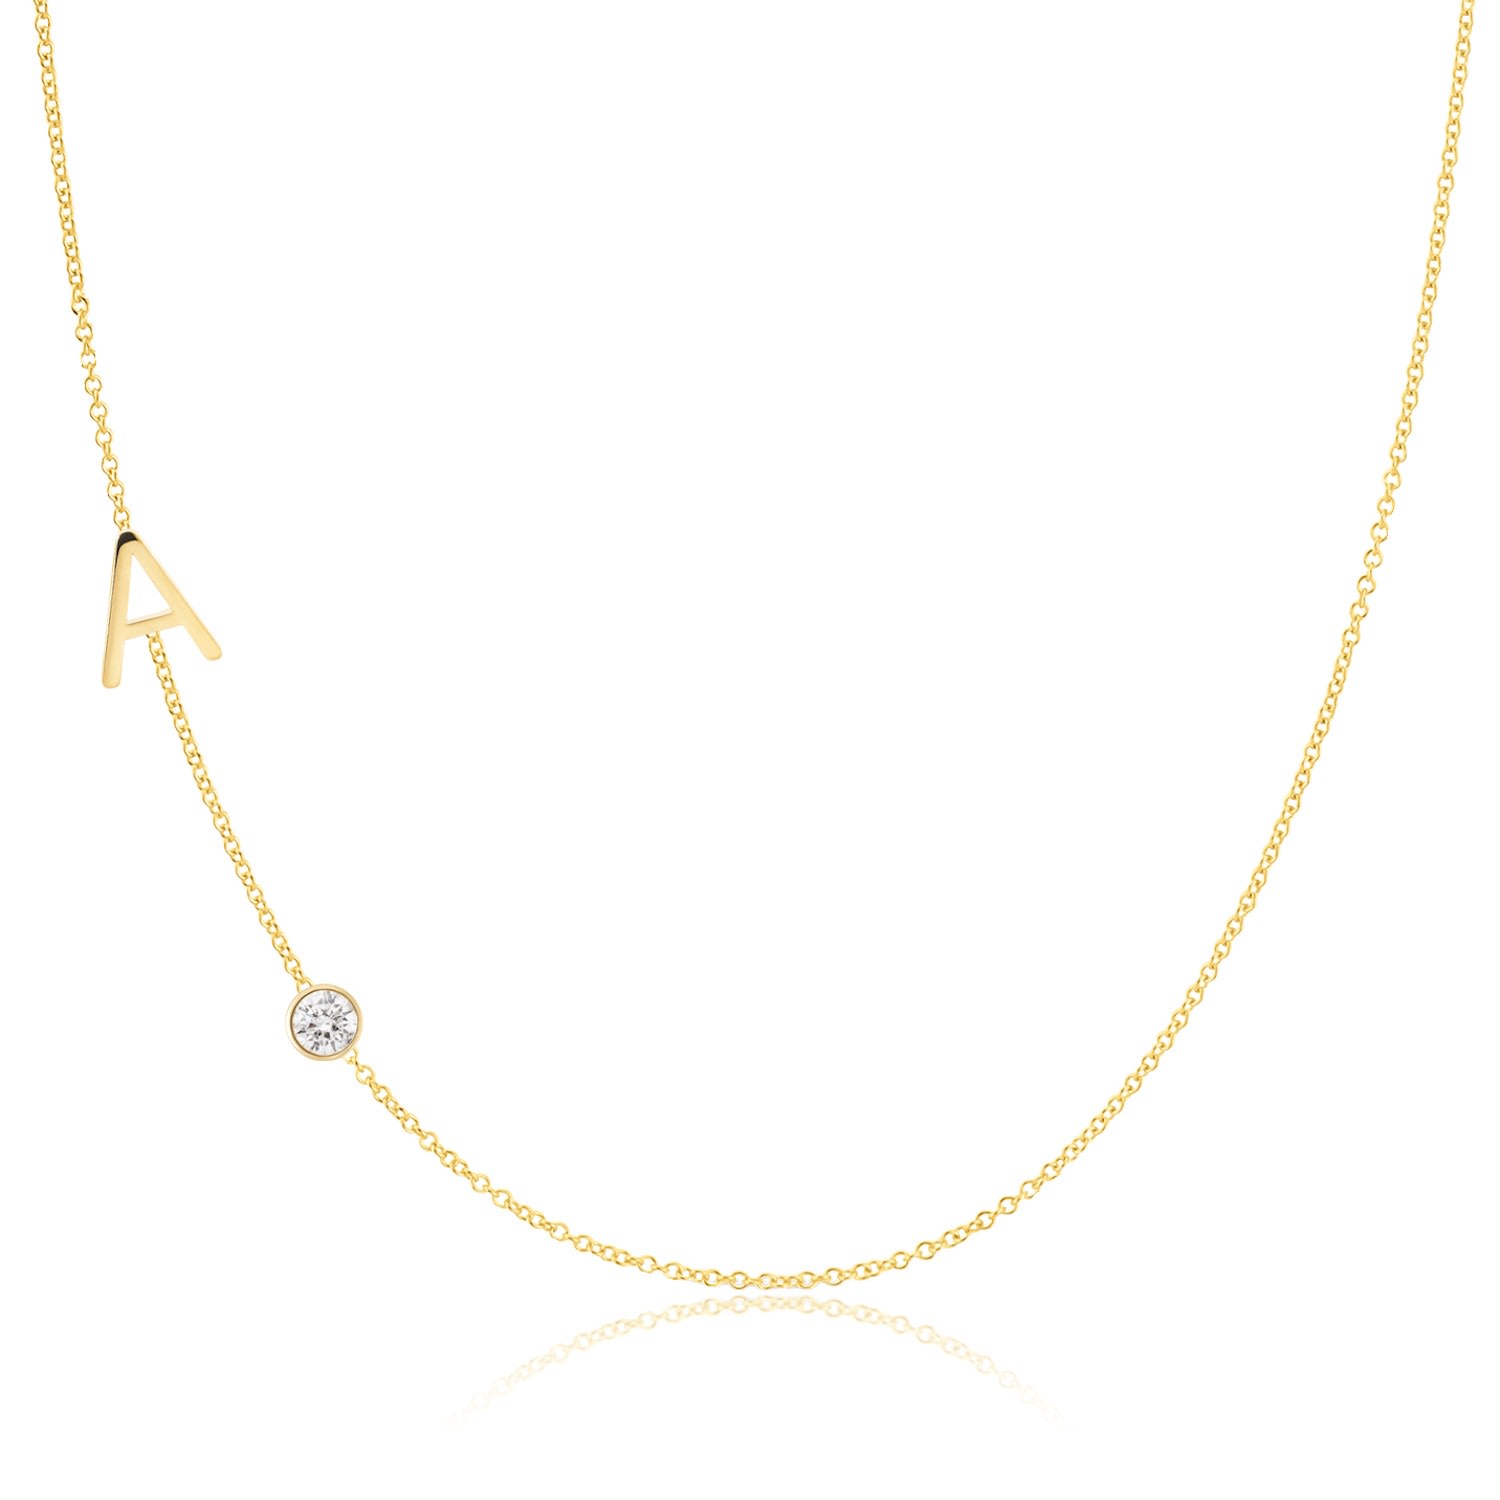 Women’s Monogram Necklace With Diamond - Yellow Gold - 16" Maya Brenner